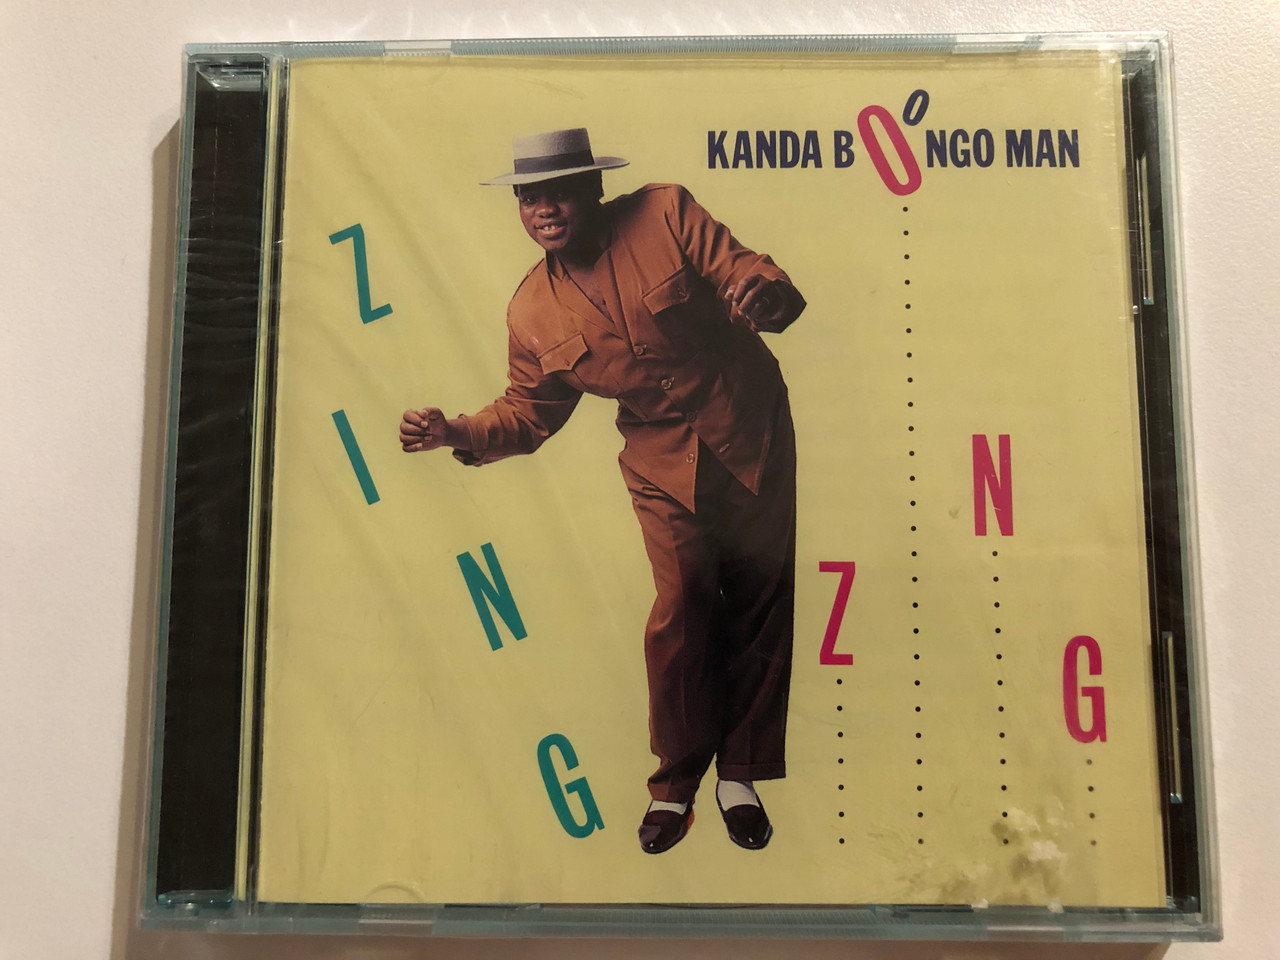 Bible　Zing　Records　Audio　in　Kanda　1366　1991　Zong　CD　Language　Bongo　–　Man　Hannibal　HNCD　My